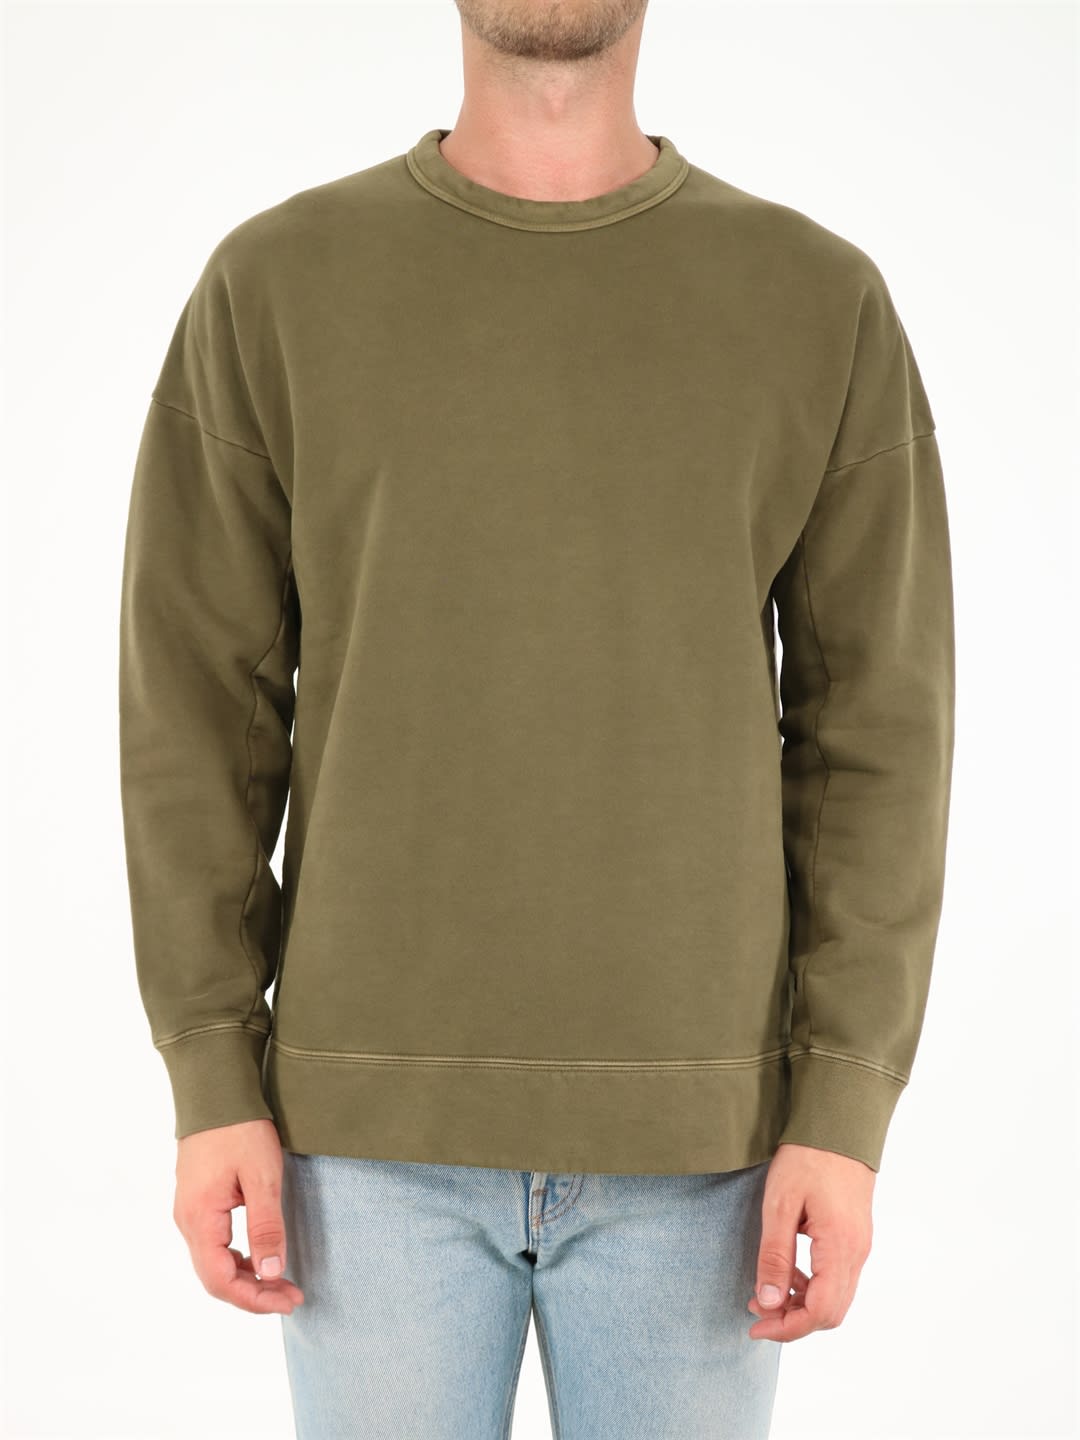 Ten C Military Green Cotton Crewneck Sweatshirt